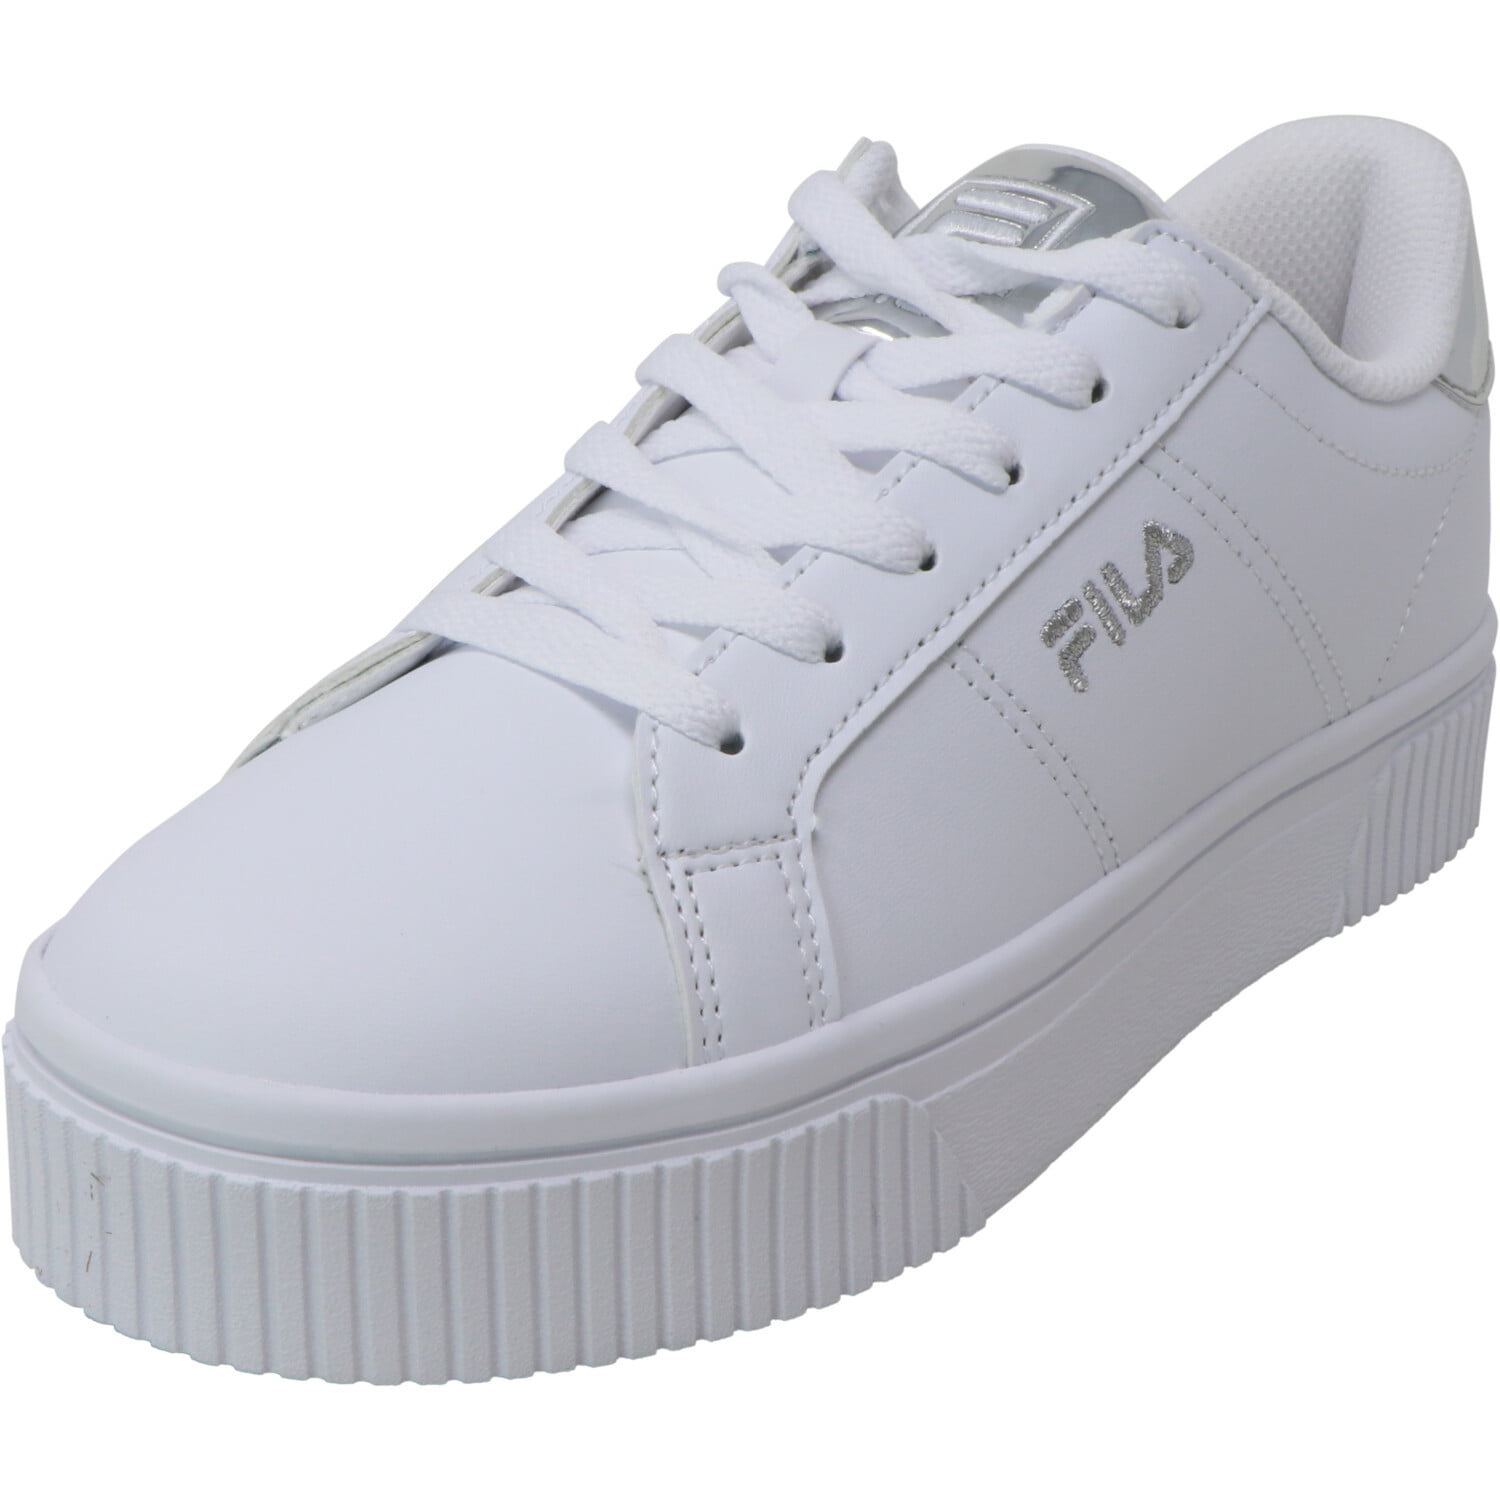 fila white leather sneakers